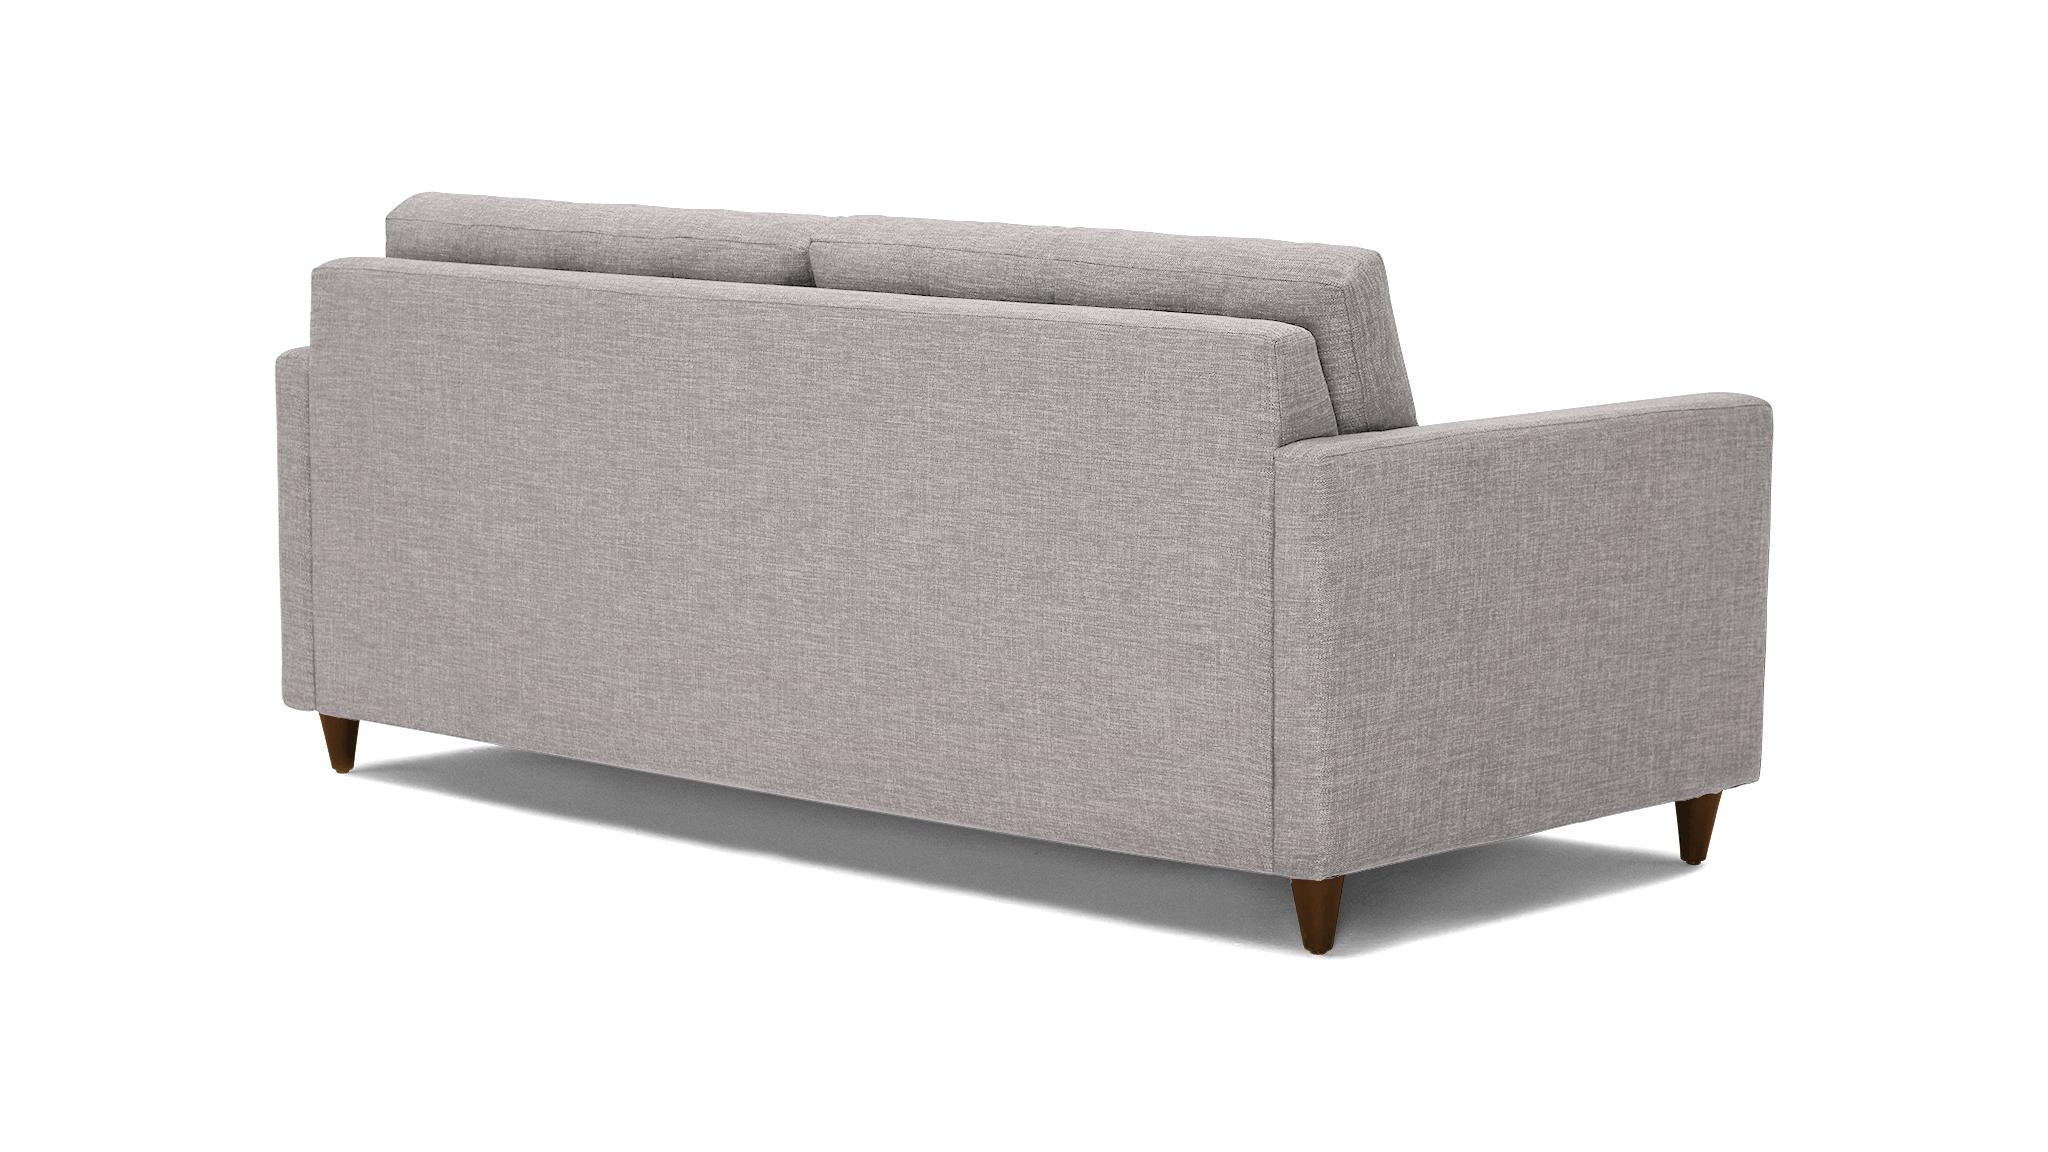 Eliot Mid Century Modern Sleeper Sofa - Sunbrella Premier Wisteria - Mocha - Foam - Image 3